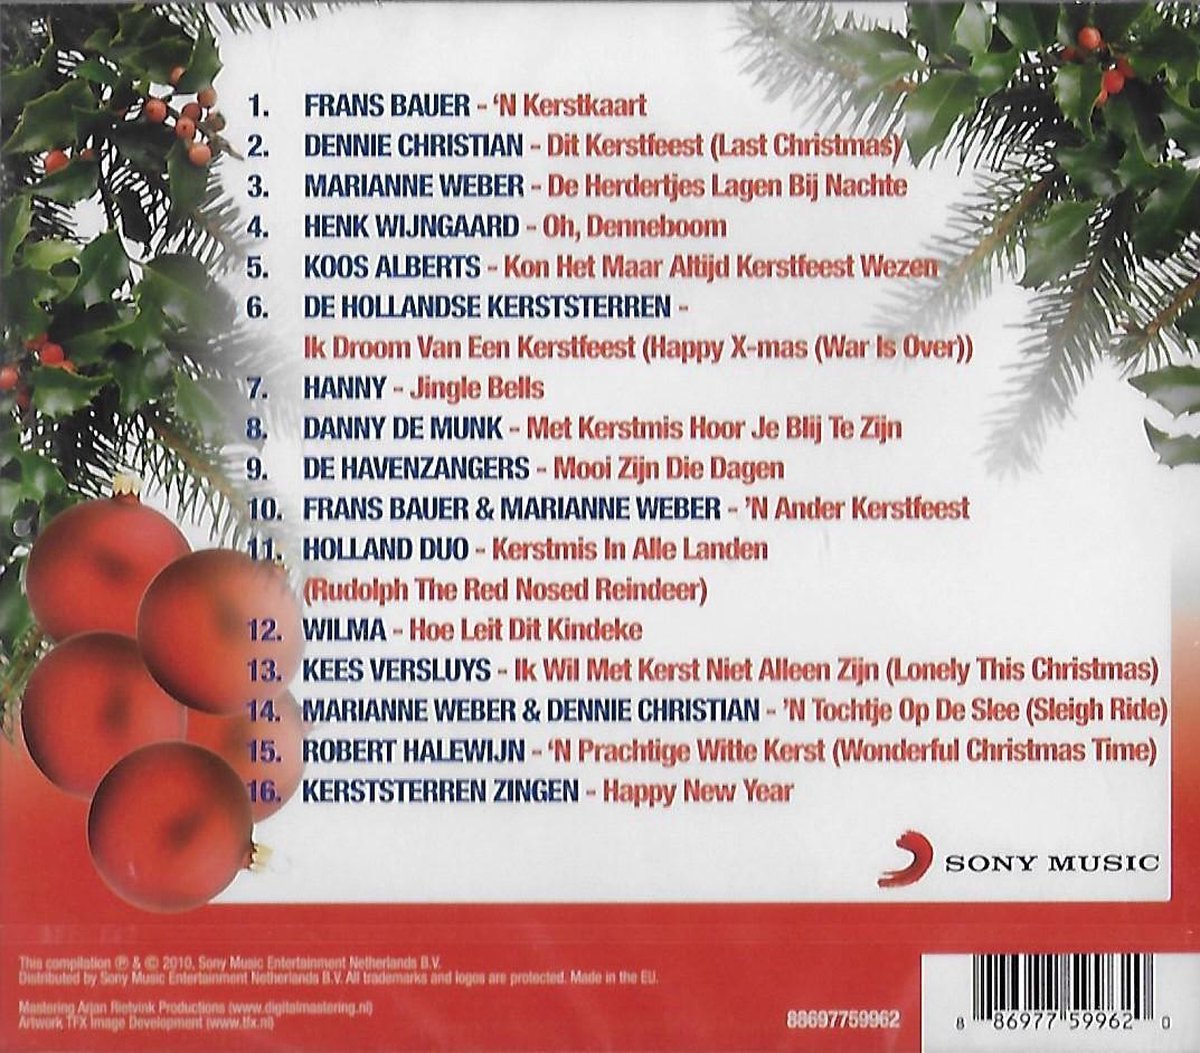 knuffel fonds vlotter Various Artists - Kerst In Nederland (CD), various artists | CD (album) |  Muziek | bol.com